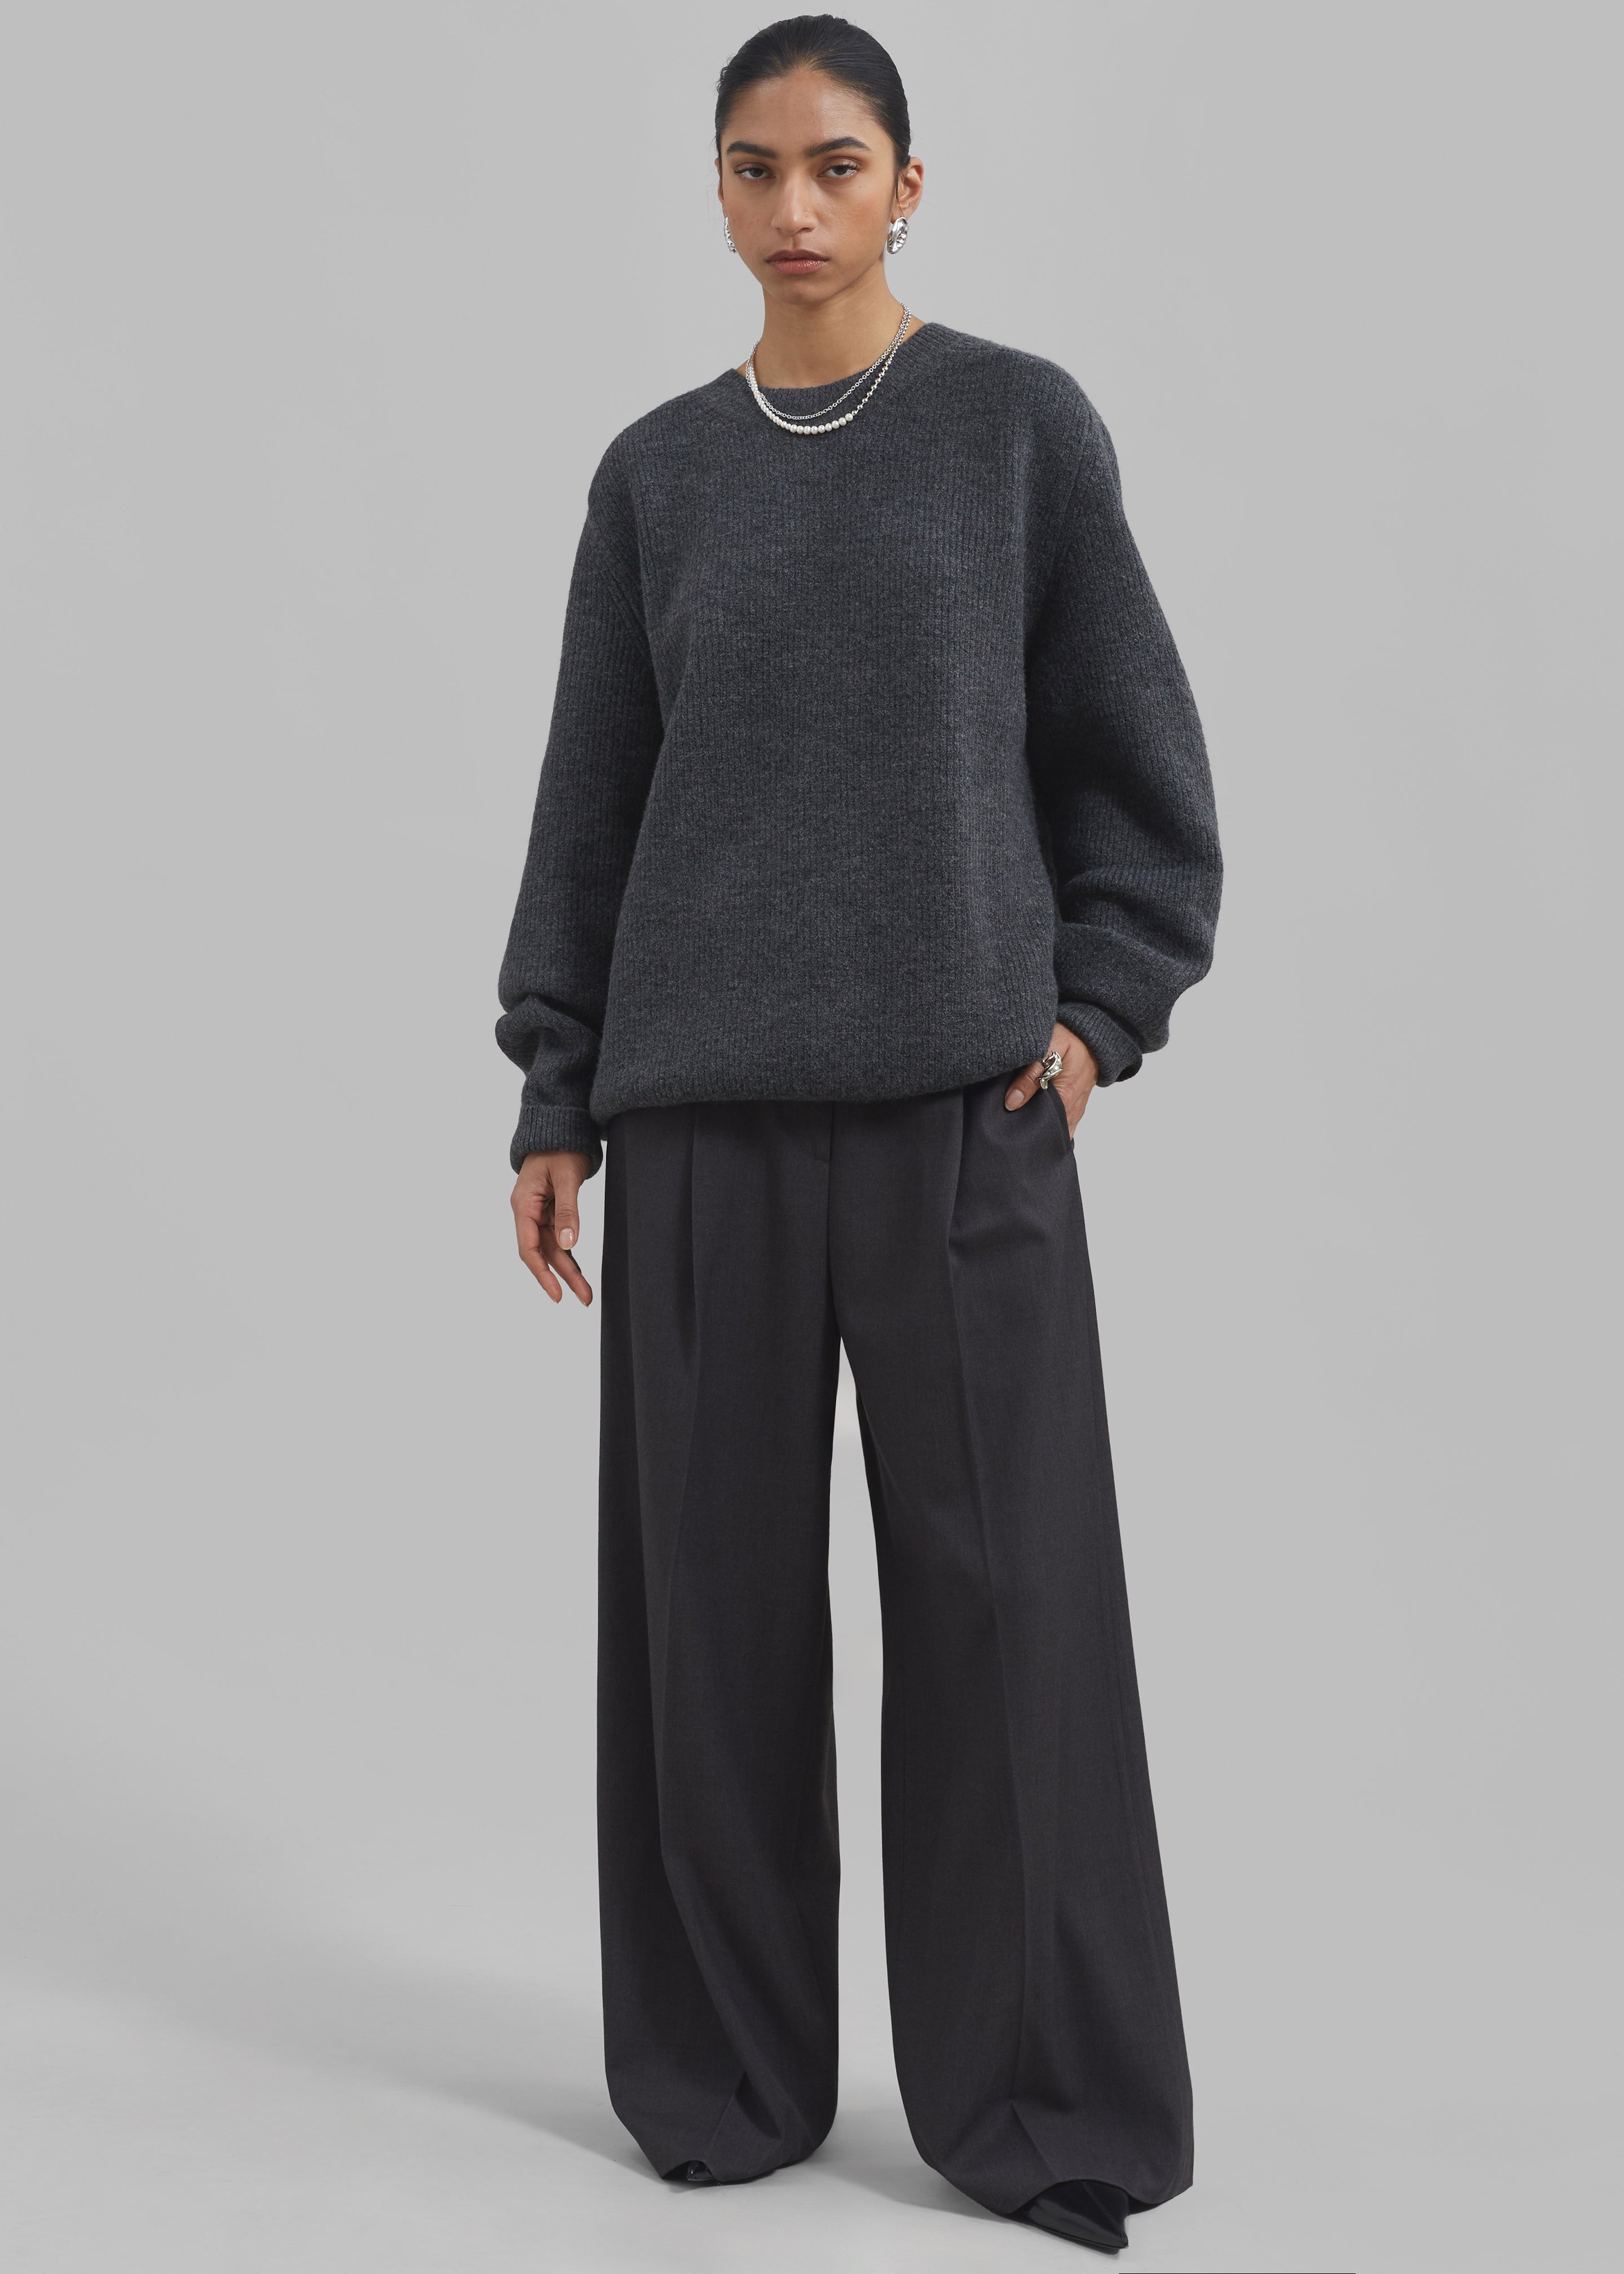 Buy Charcoal Grey Trousers & Pants for Women by SHYLA Online | Ajio.com